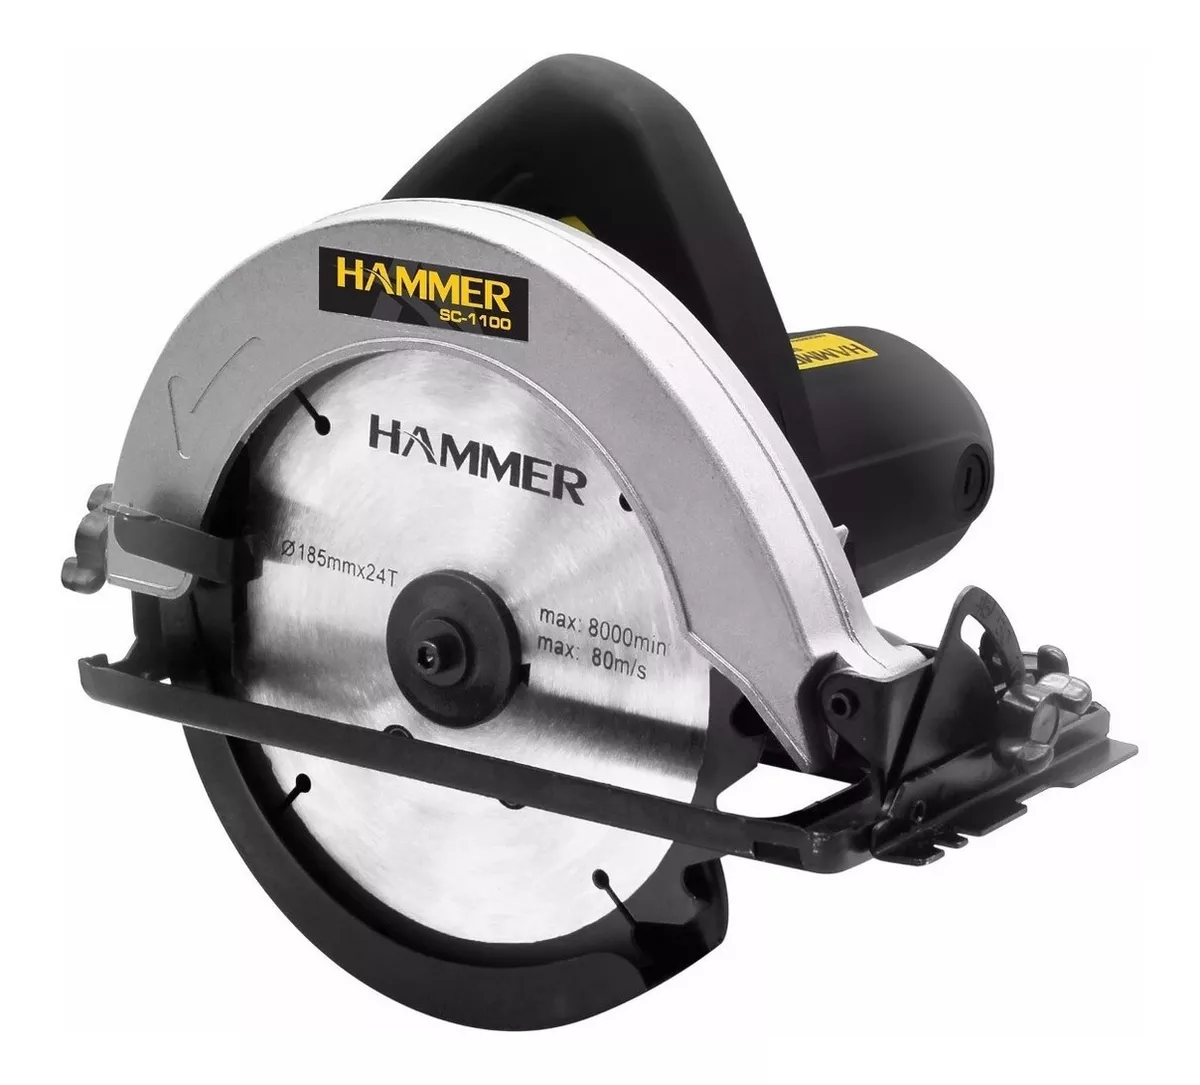 Serra Circular Elétrica Hammer Sc1100 185mm 1100w Preta 110v